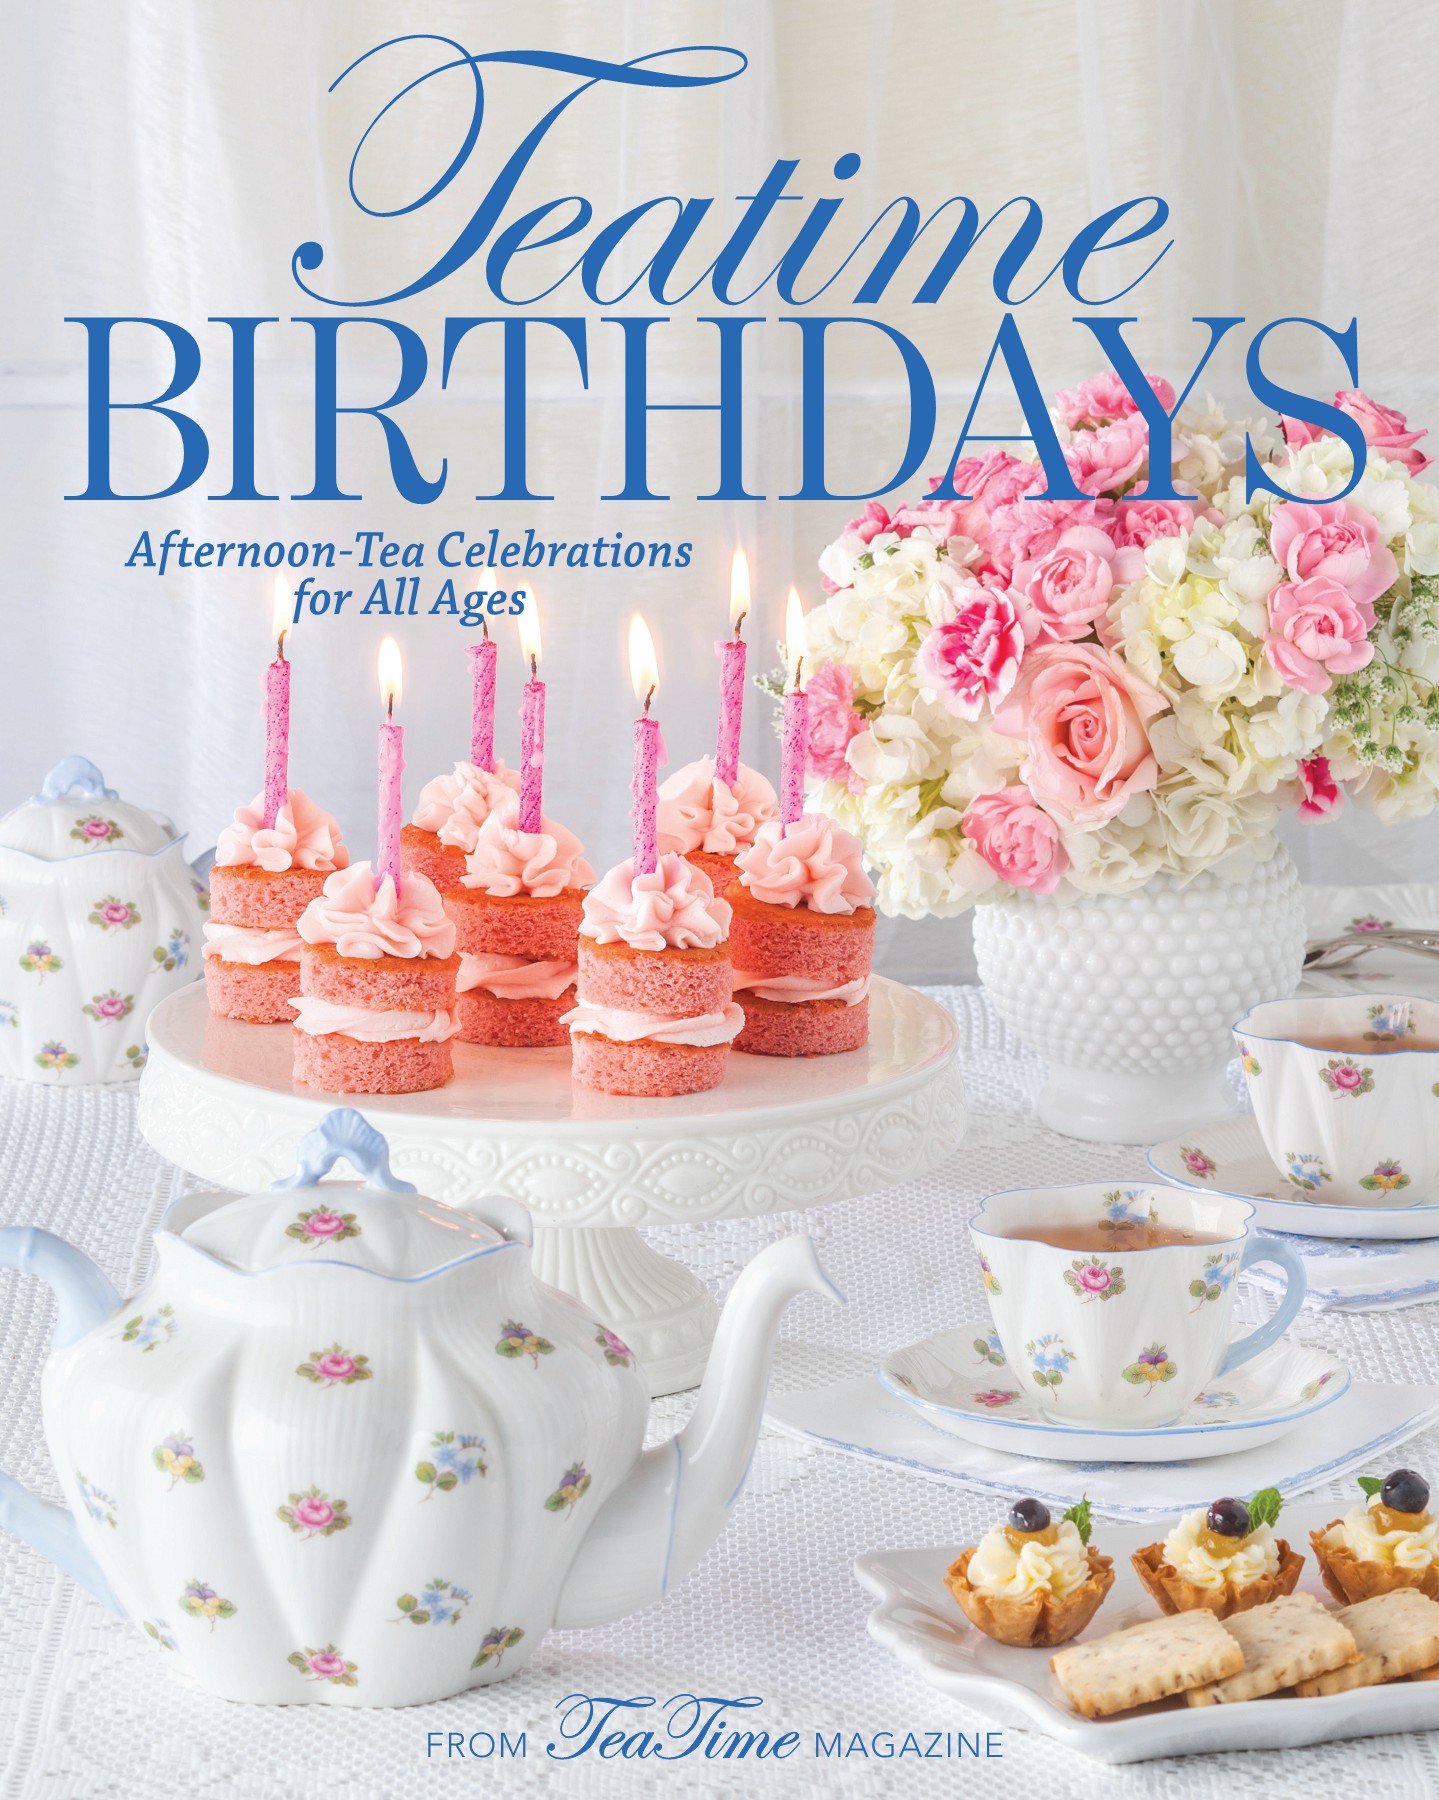 Image for "Teatime Birthdays"